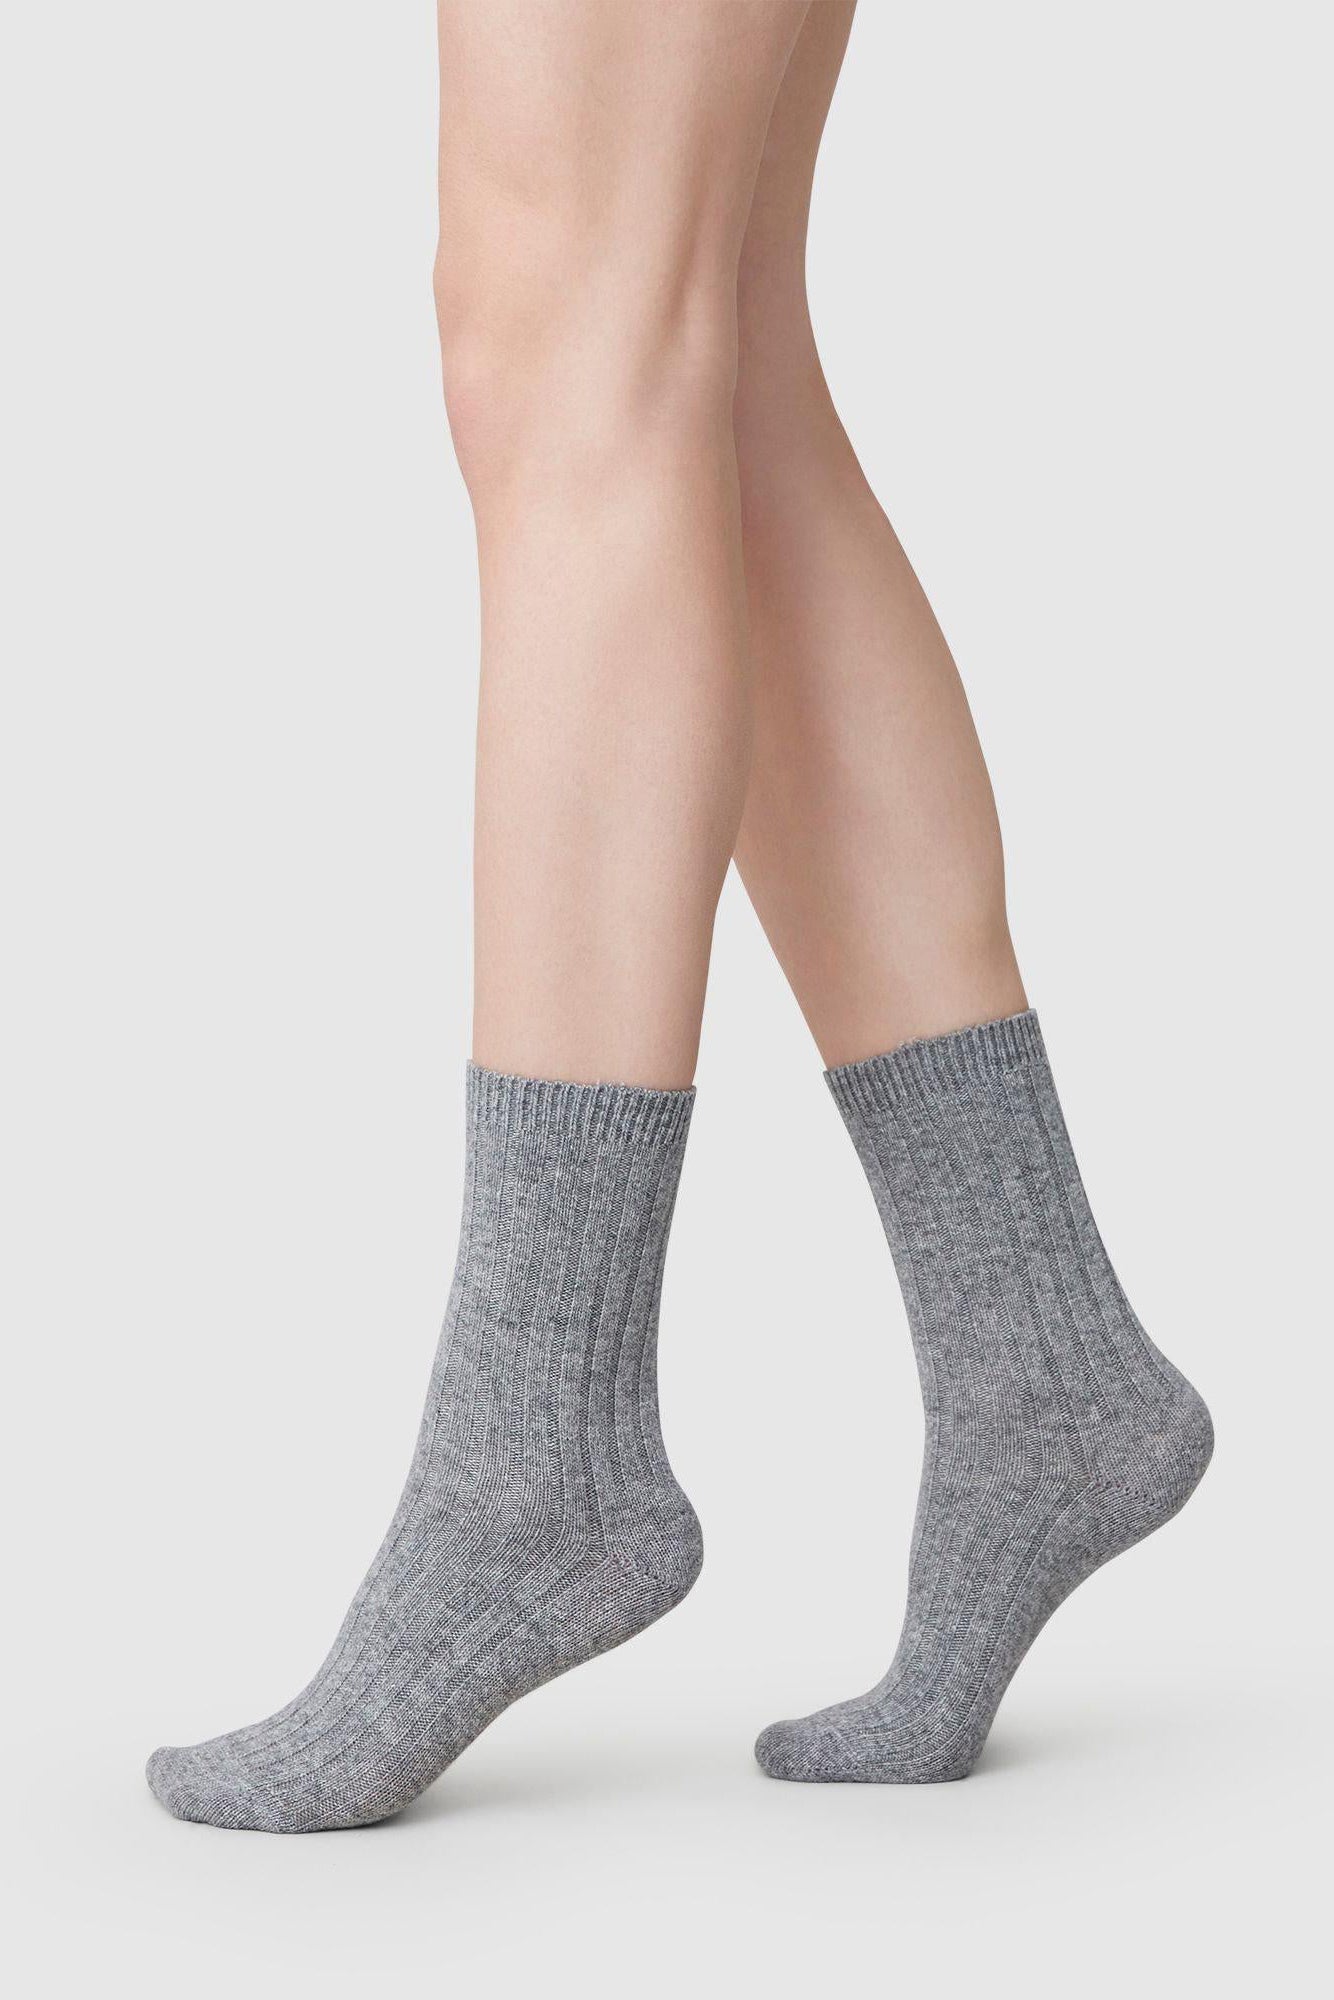 Swedish Stockings Bodil Chunky Socks - Grey - RUM Amsterdam